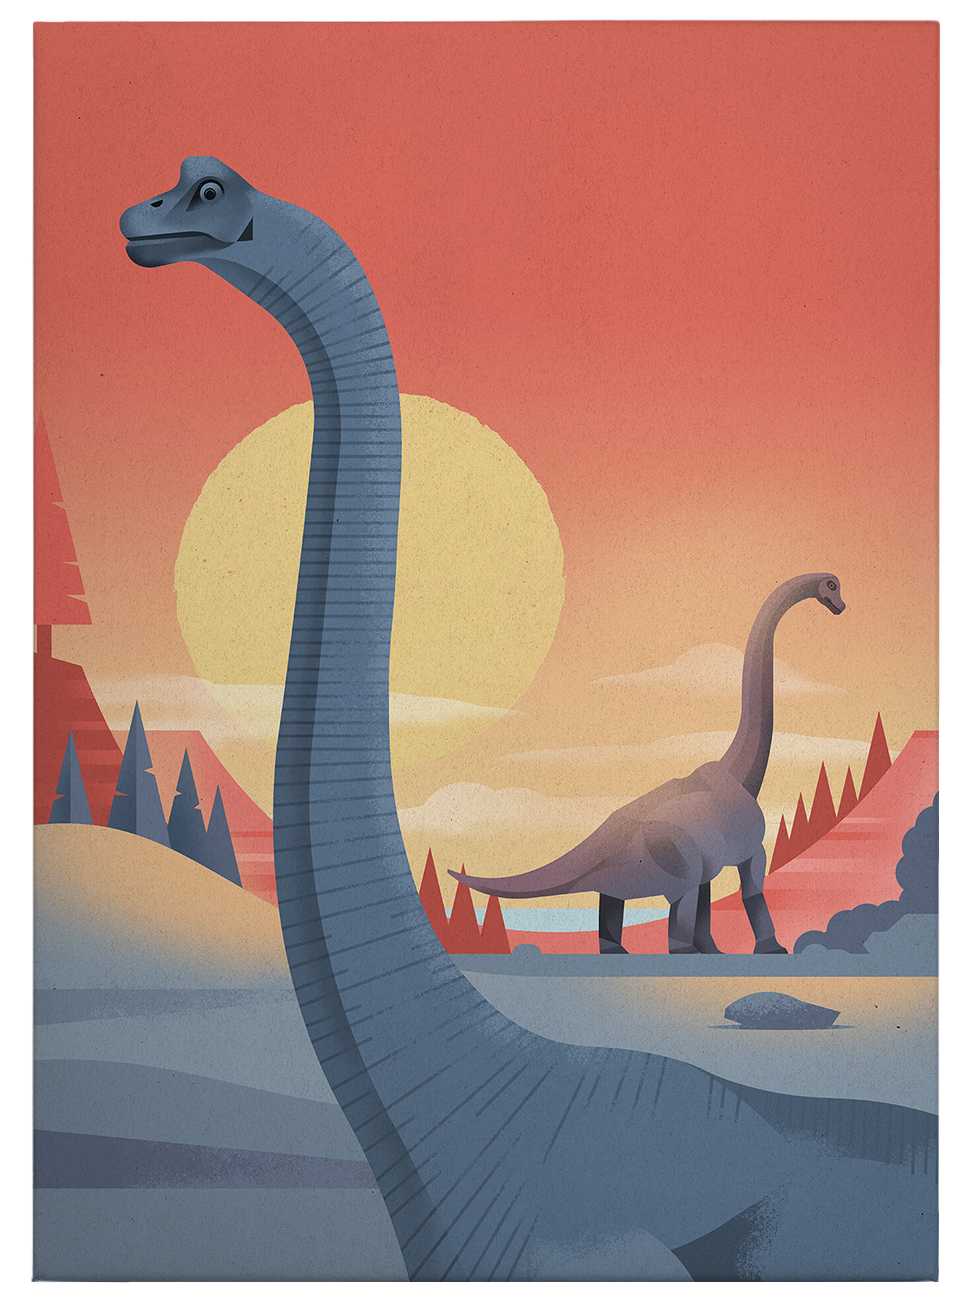             Leinwandbild Dinosaurier im Sonnenaufgang – 0,50 m x 0,70 m
        